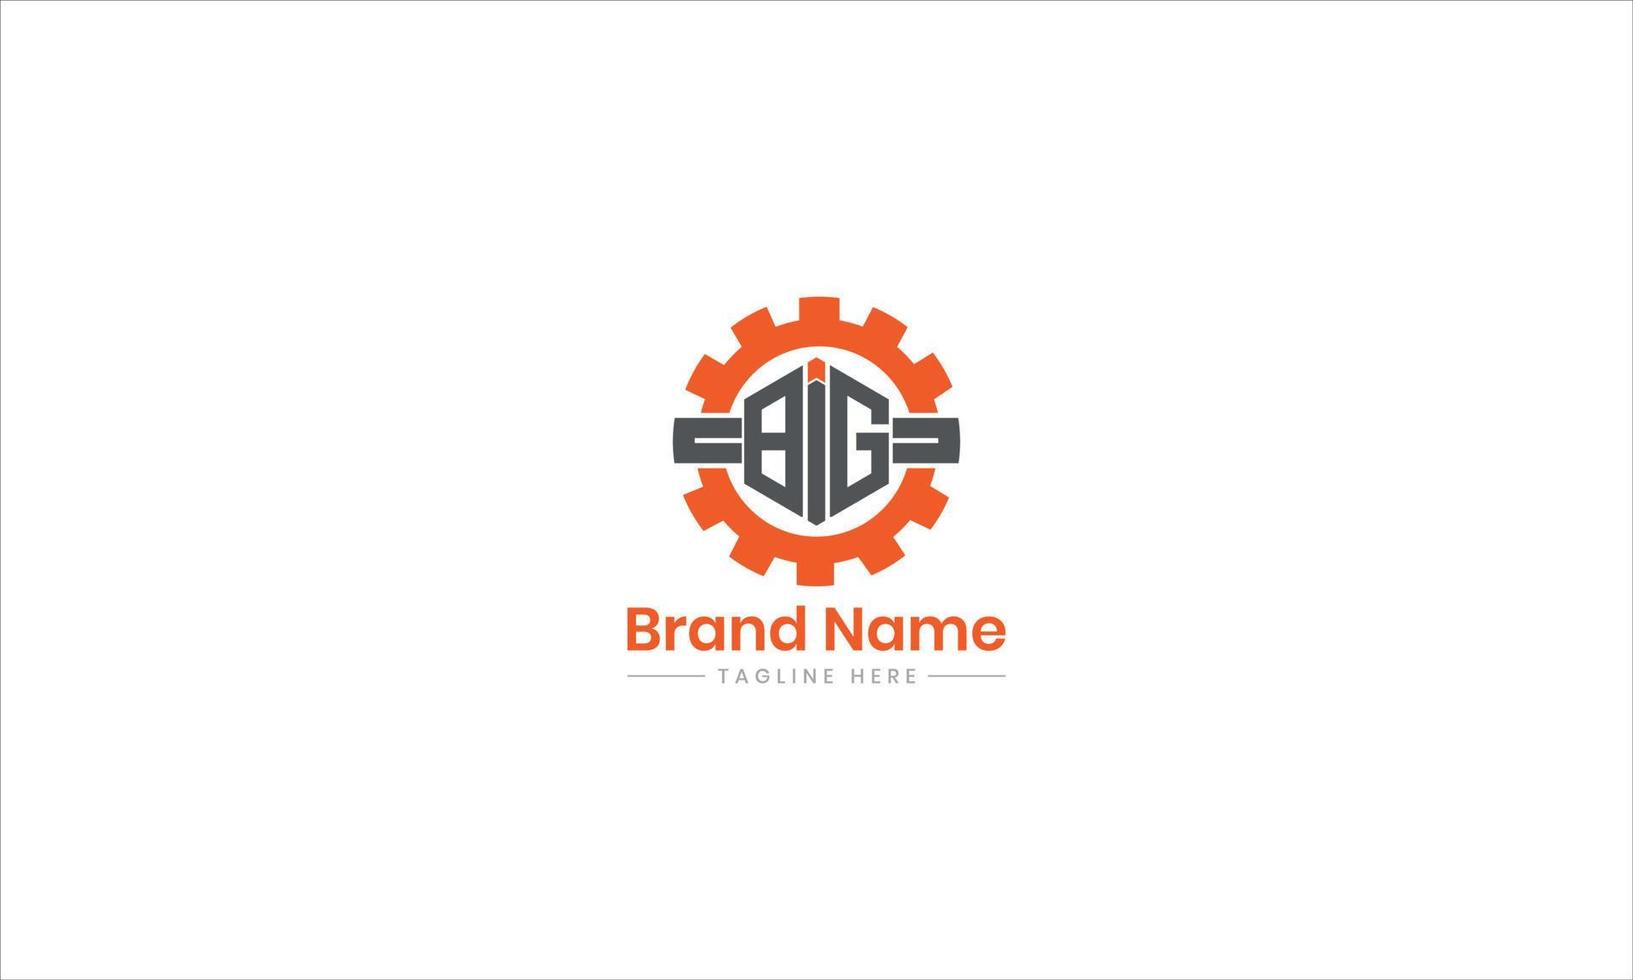 Auto Bedienung Logo Vektor Illustration mit groß Brief, groß Brief Logo. Profi Vektor